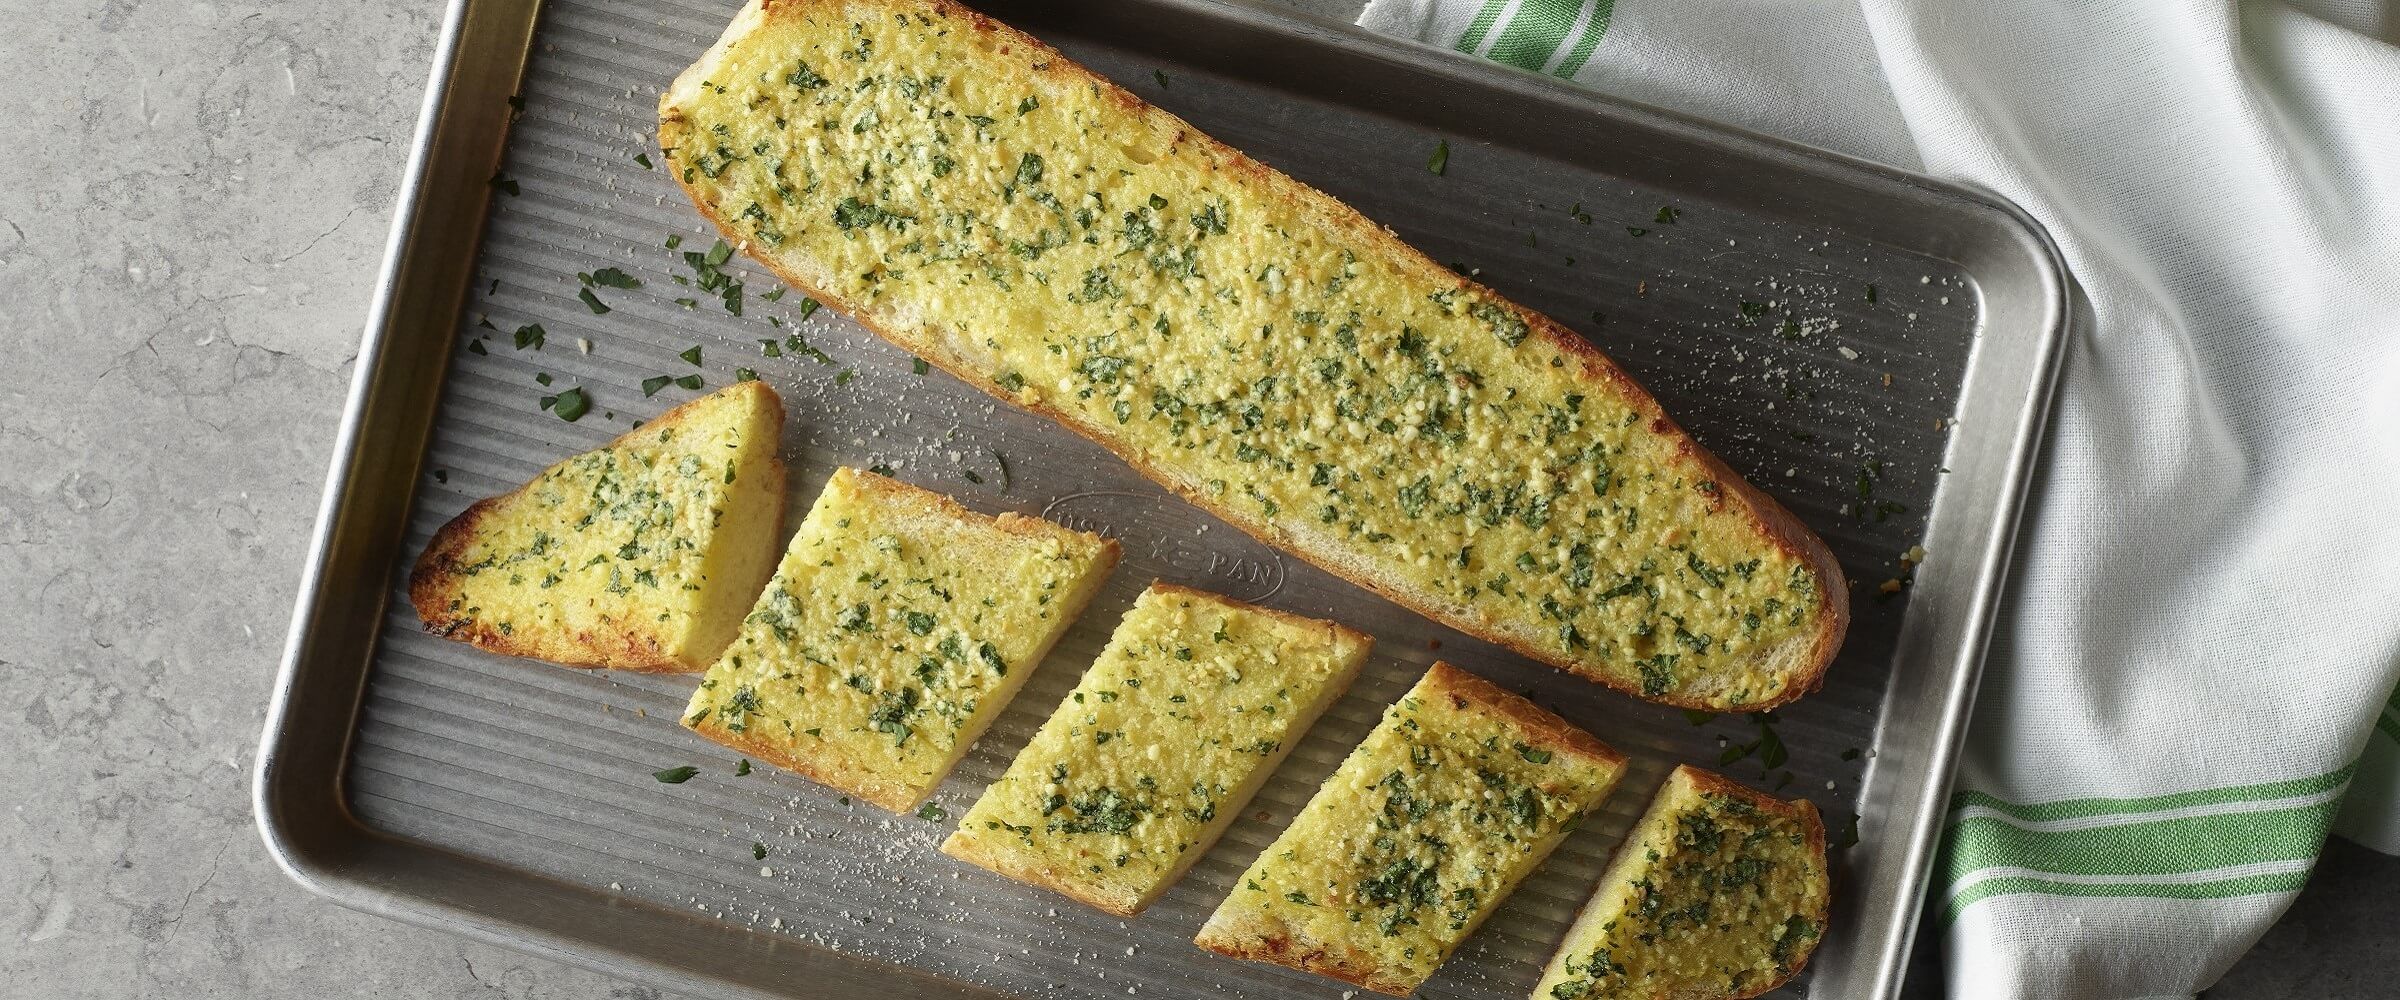 Garlic bread with seasoning on sheet pan next to linen napkin